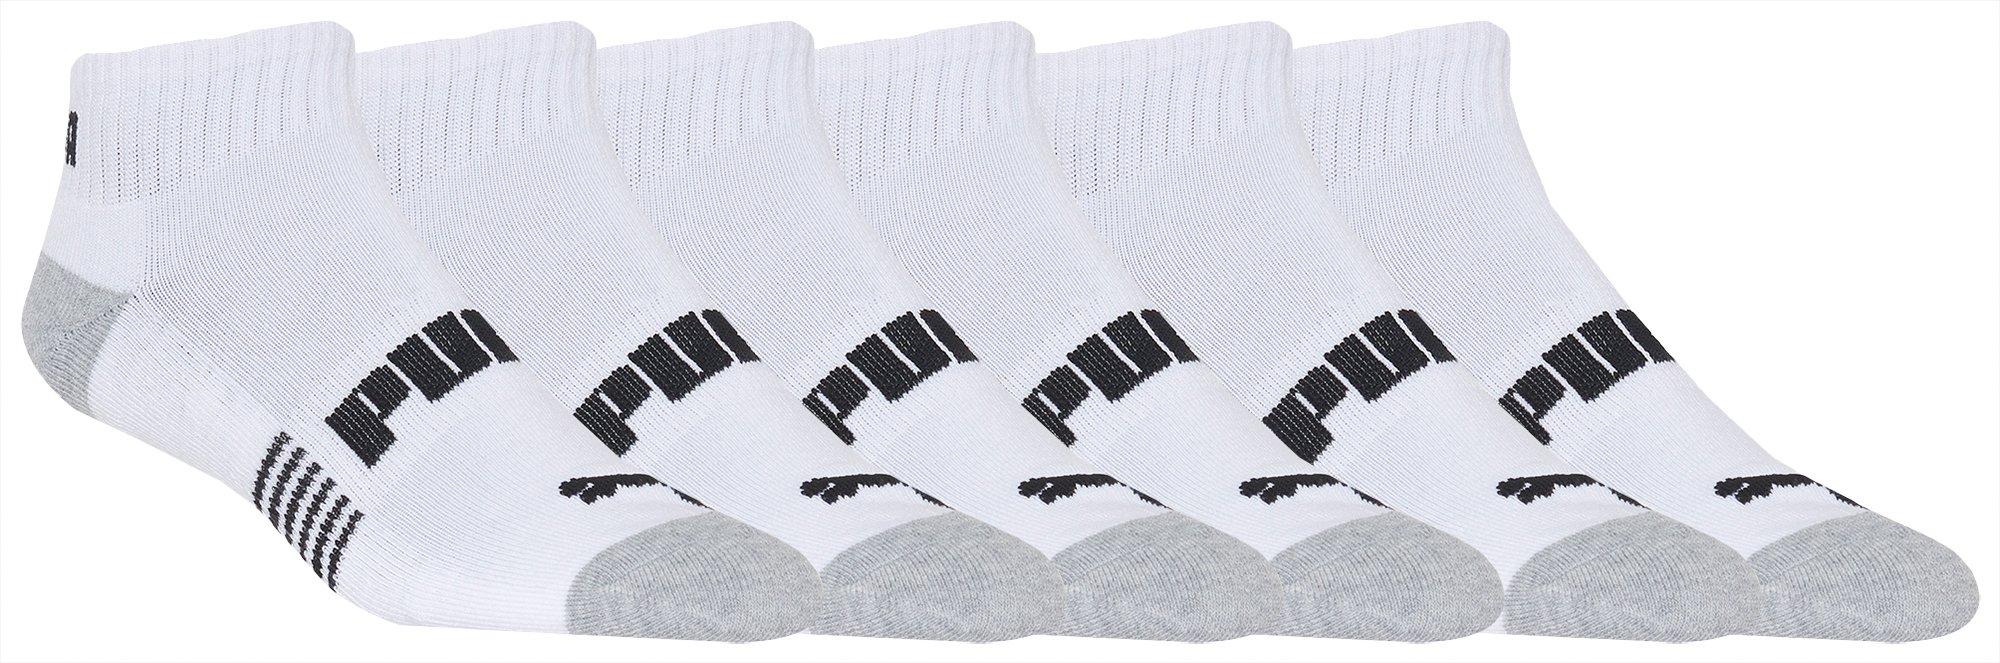 puma men's quarter crew socks